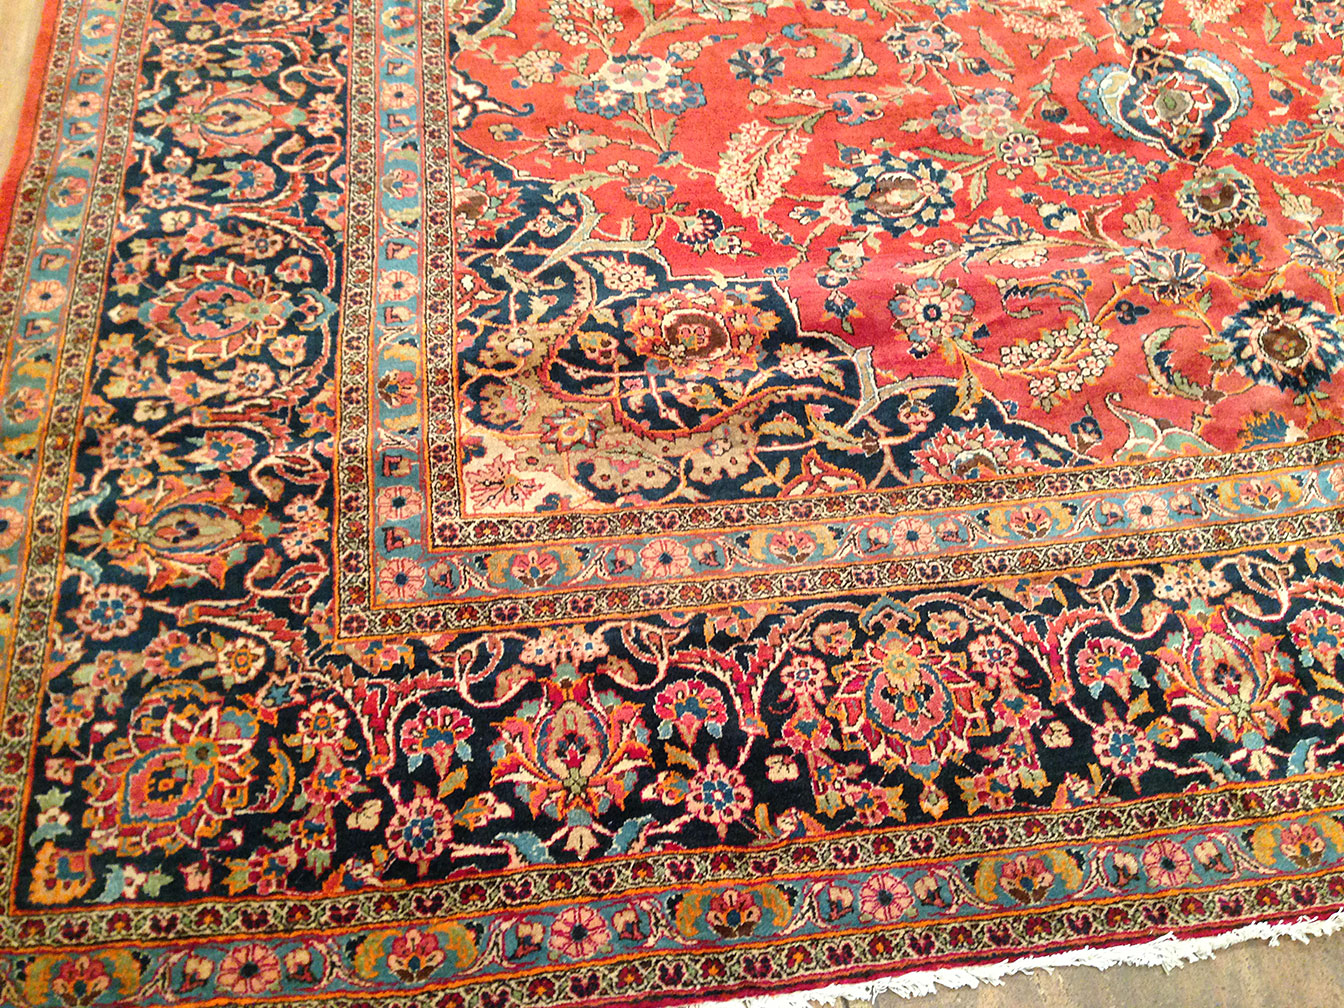 Antique kashan Carpet - # 50284